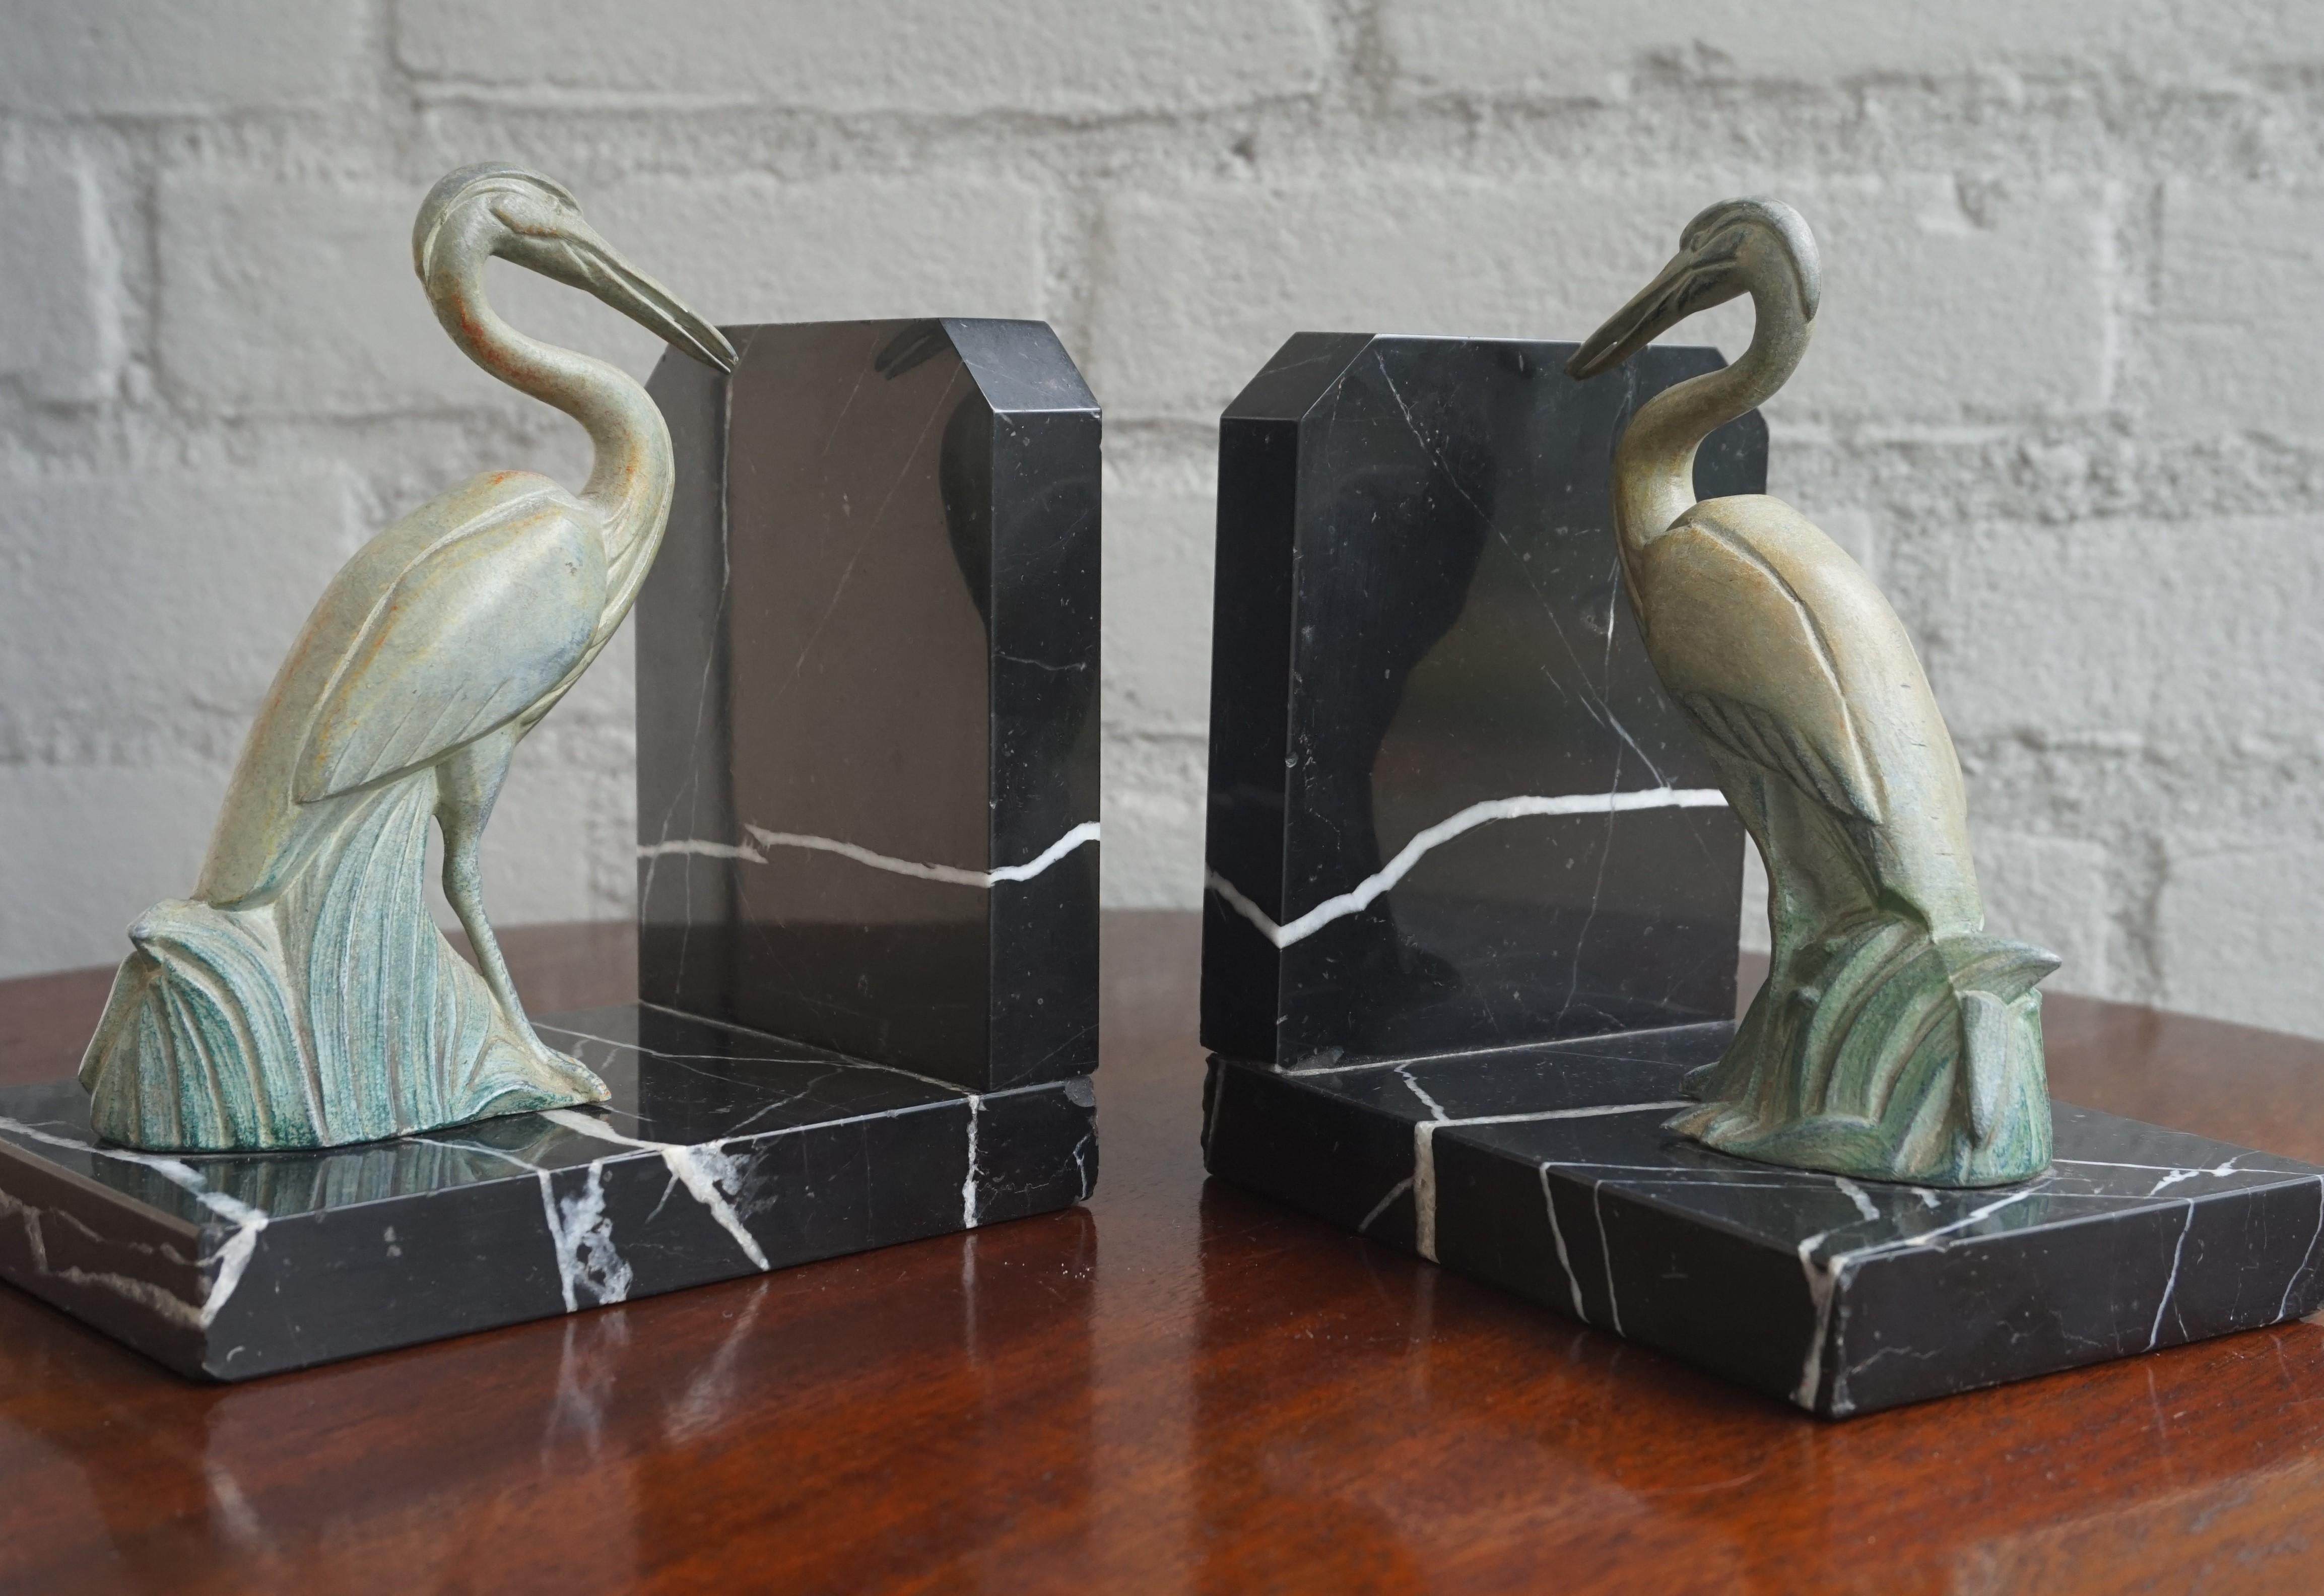 European Antique Pair of Art Deco Bookends with Max Le Verrier Style Stork Sculptures